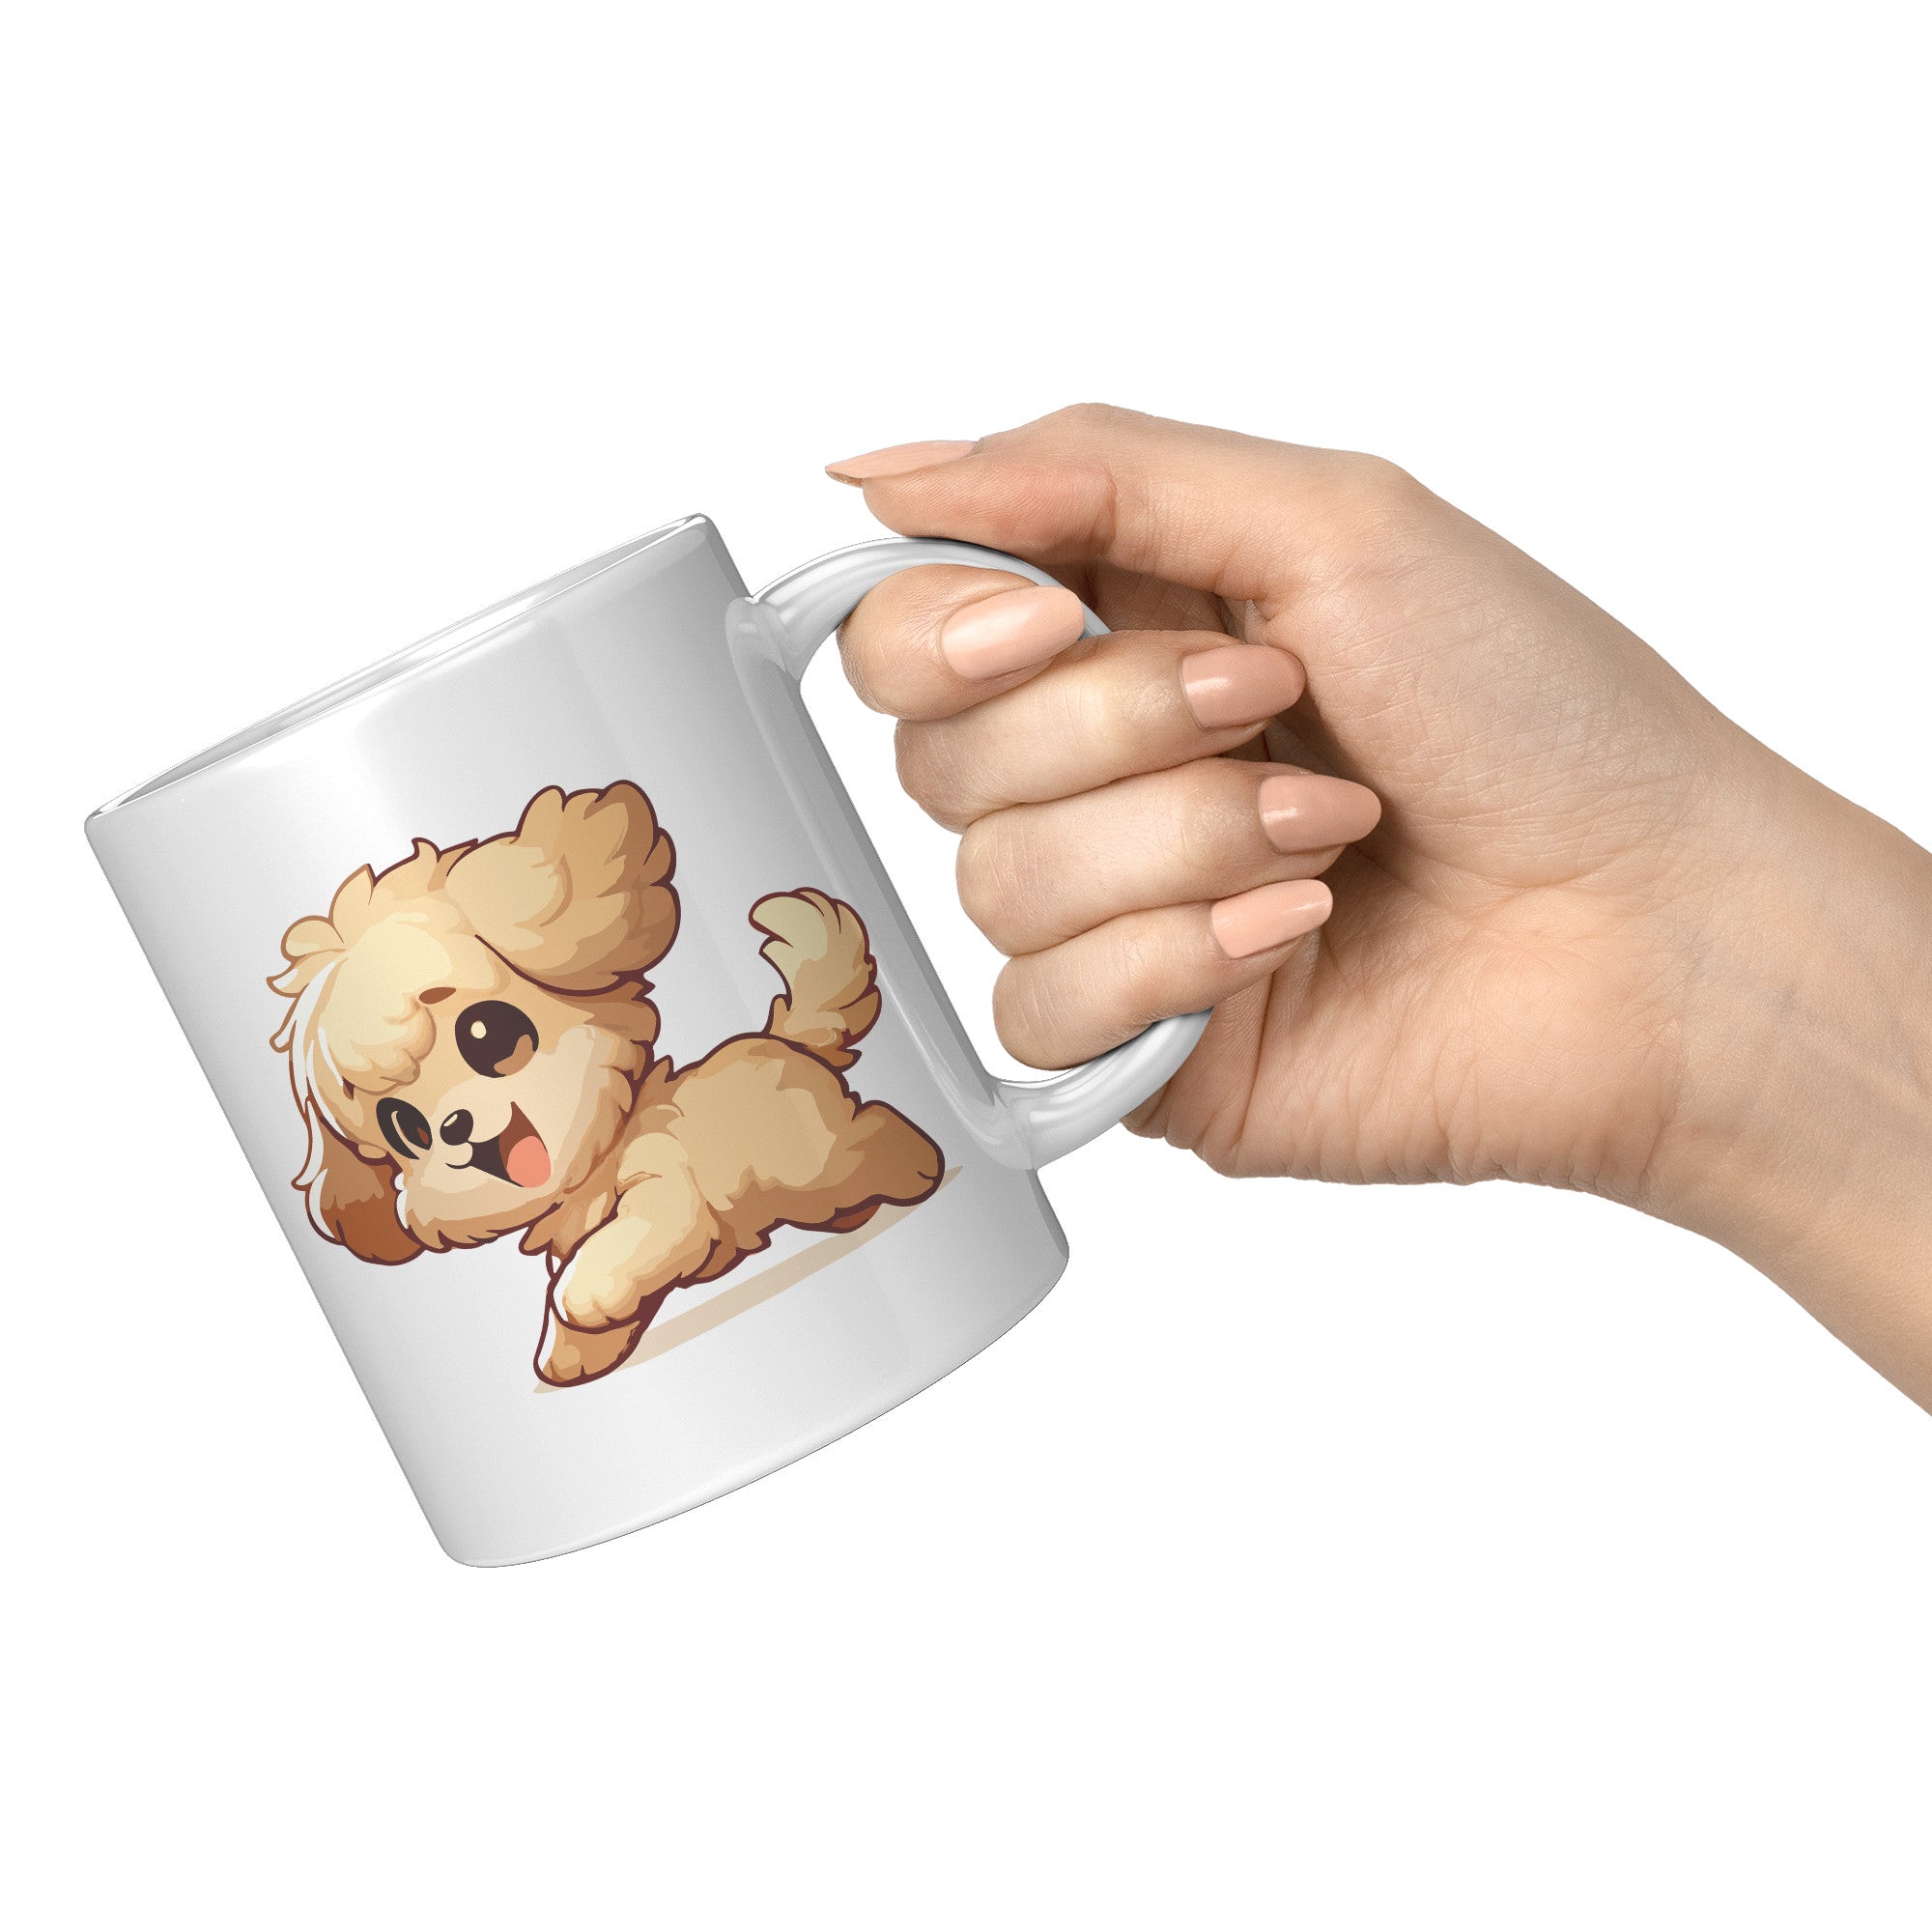 11oz Golden Retriever Cartoon Coffee Mug - Heartwarming Dog Lover Coffee Mug - Perfect Gift for Golden Owners - Friendly Pup Coffee Mug - S